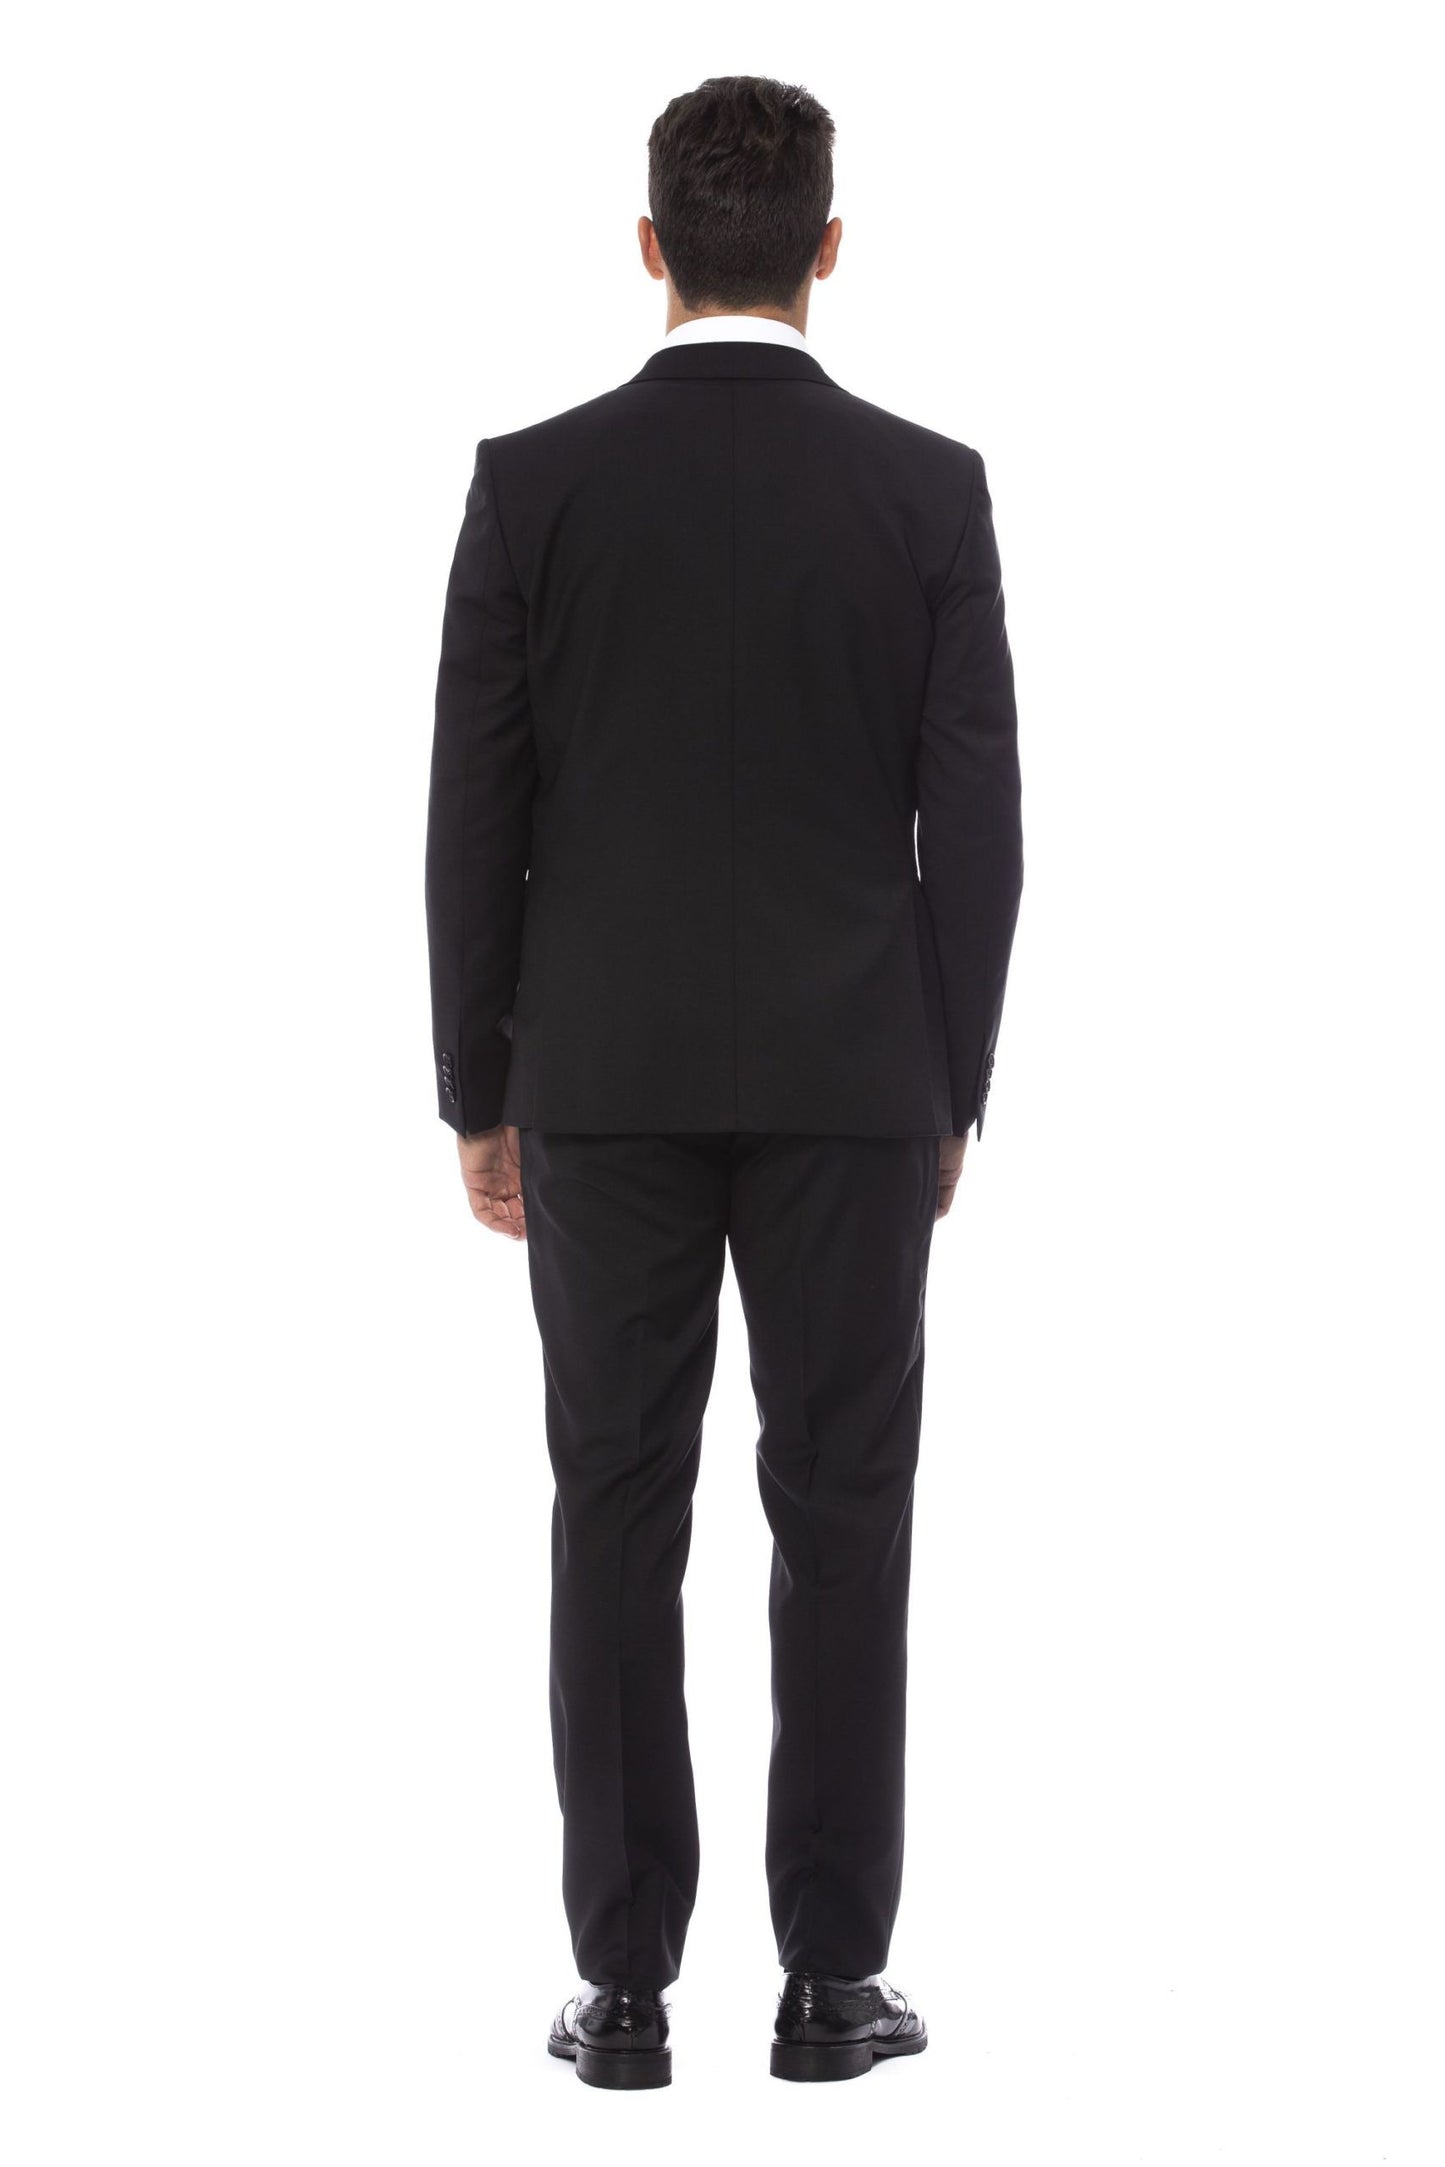 Sleek Slim Fit Designer Suit